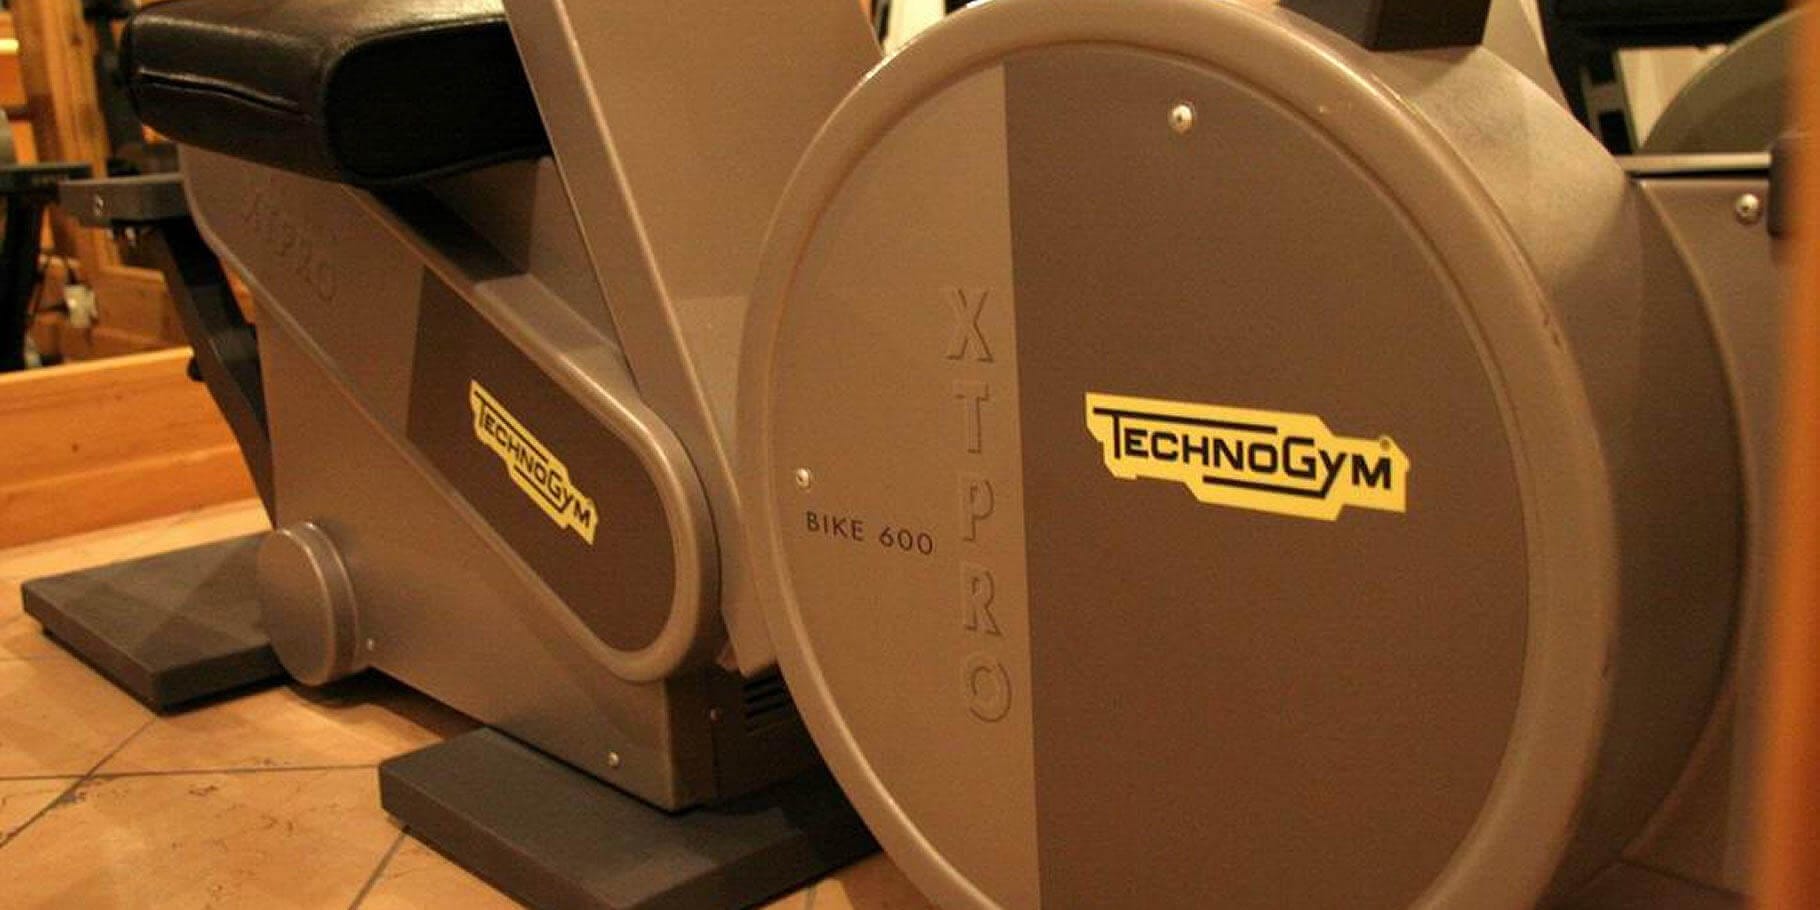 Gym with Technogym equipment